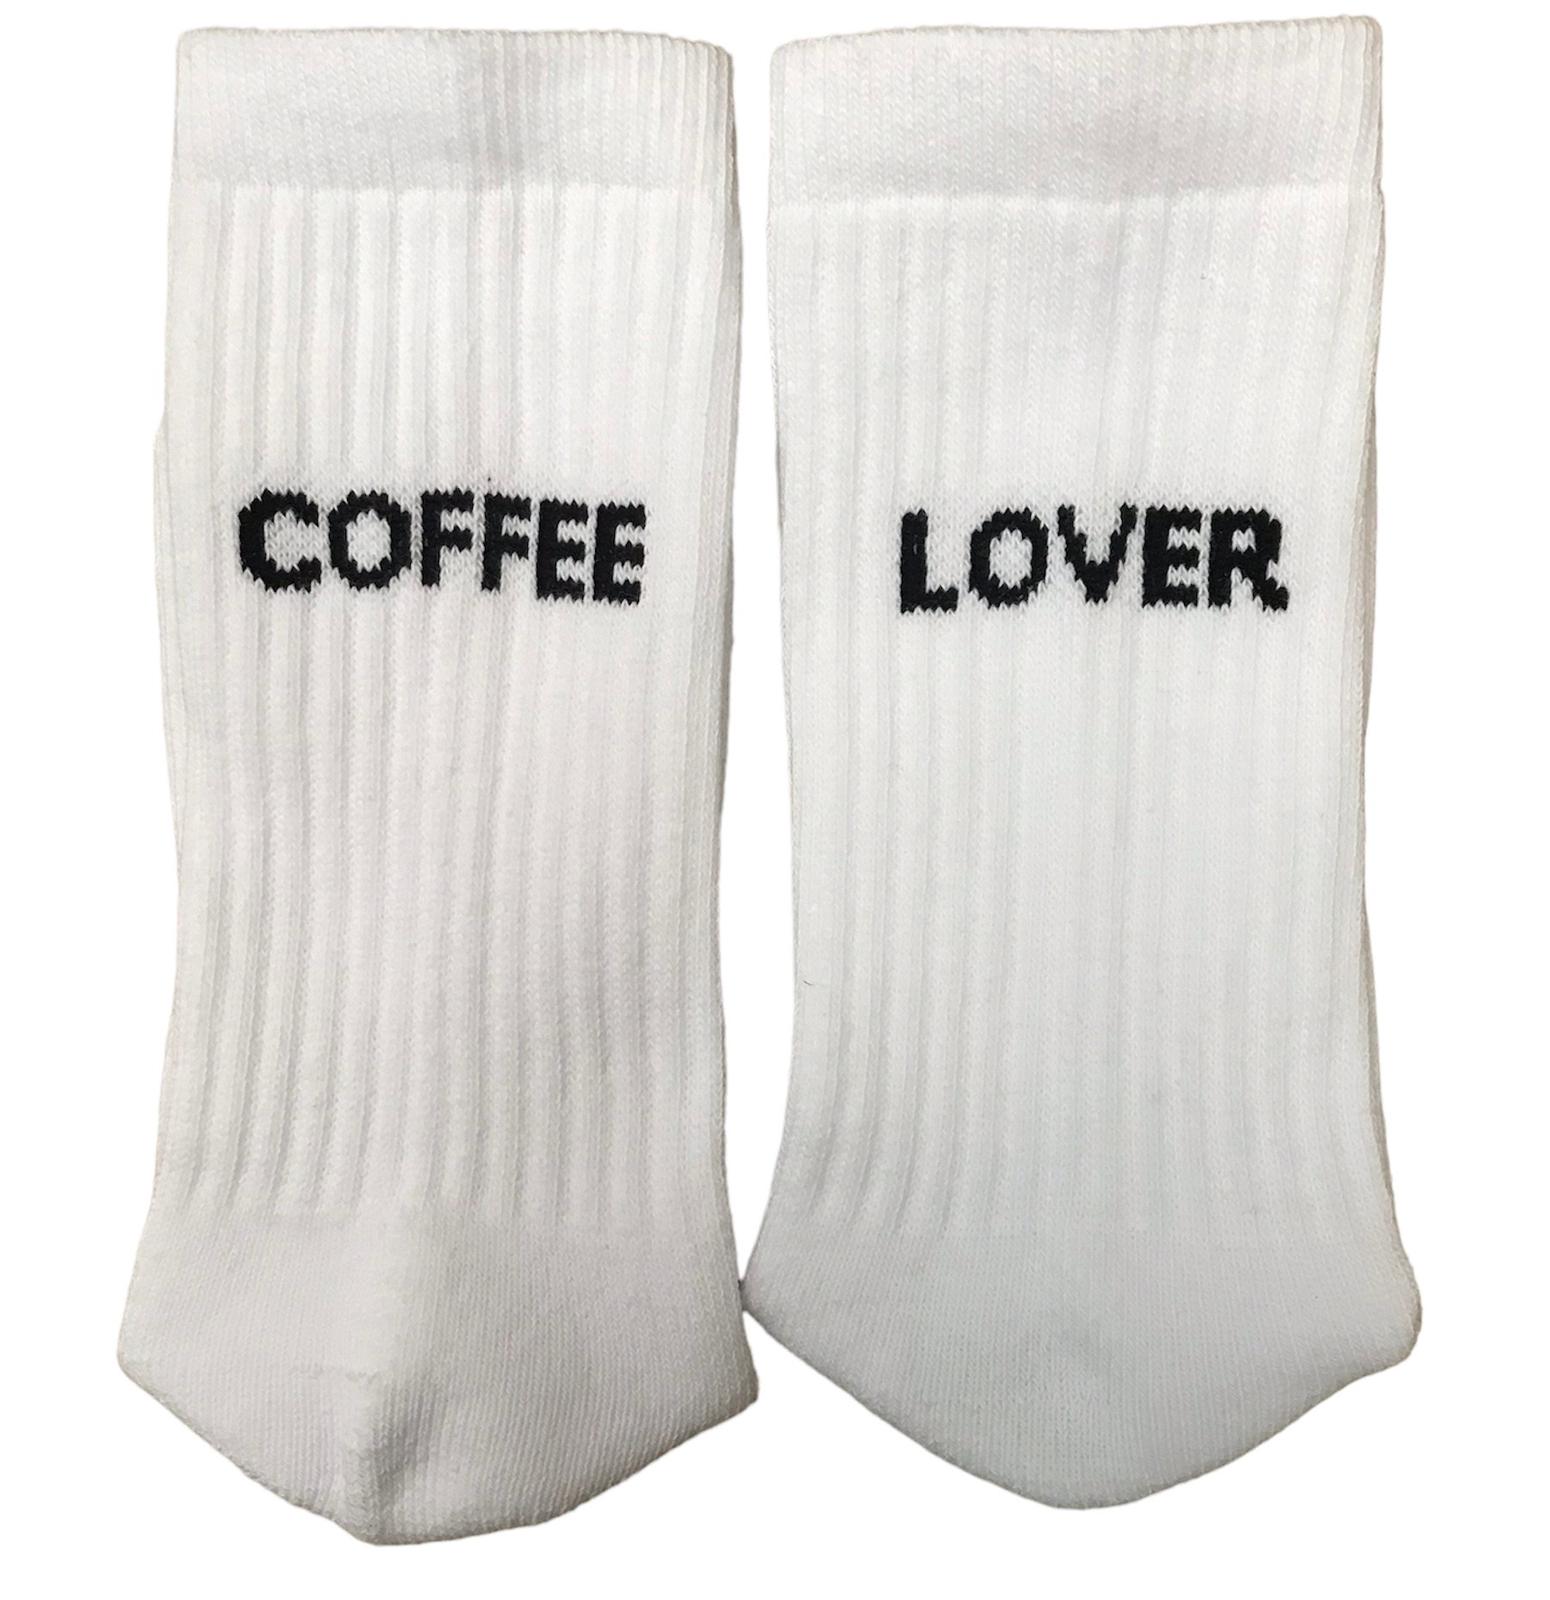 sock coffee lover